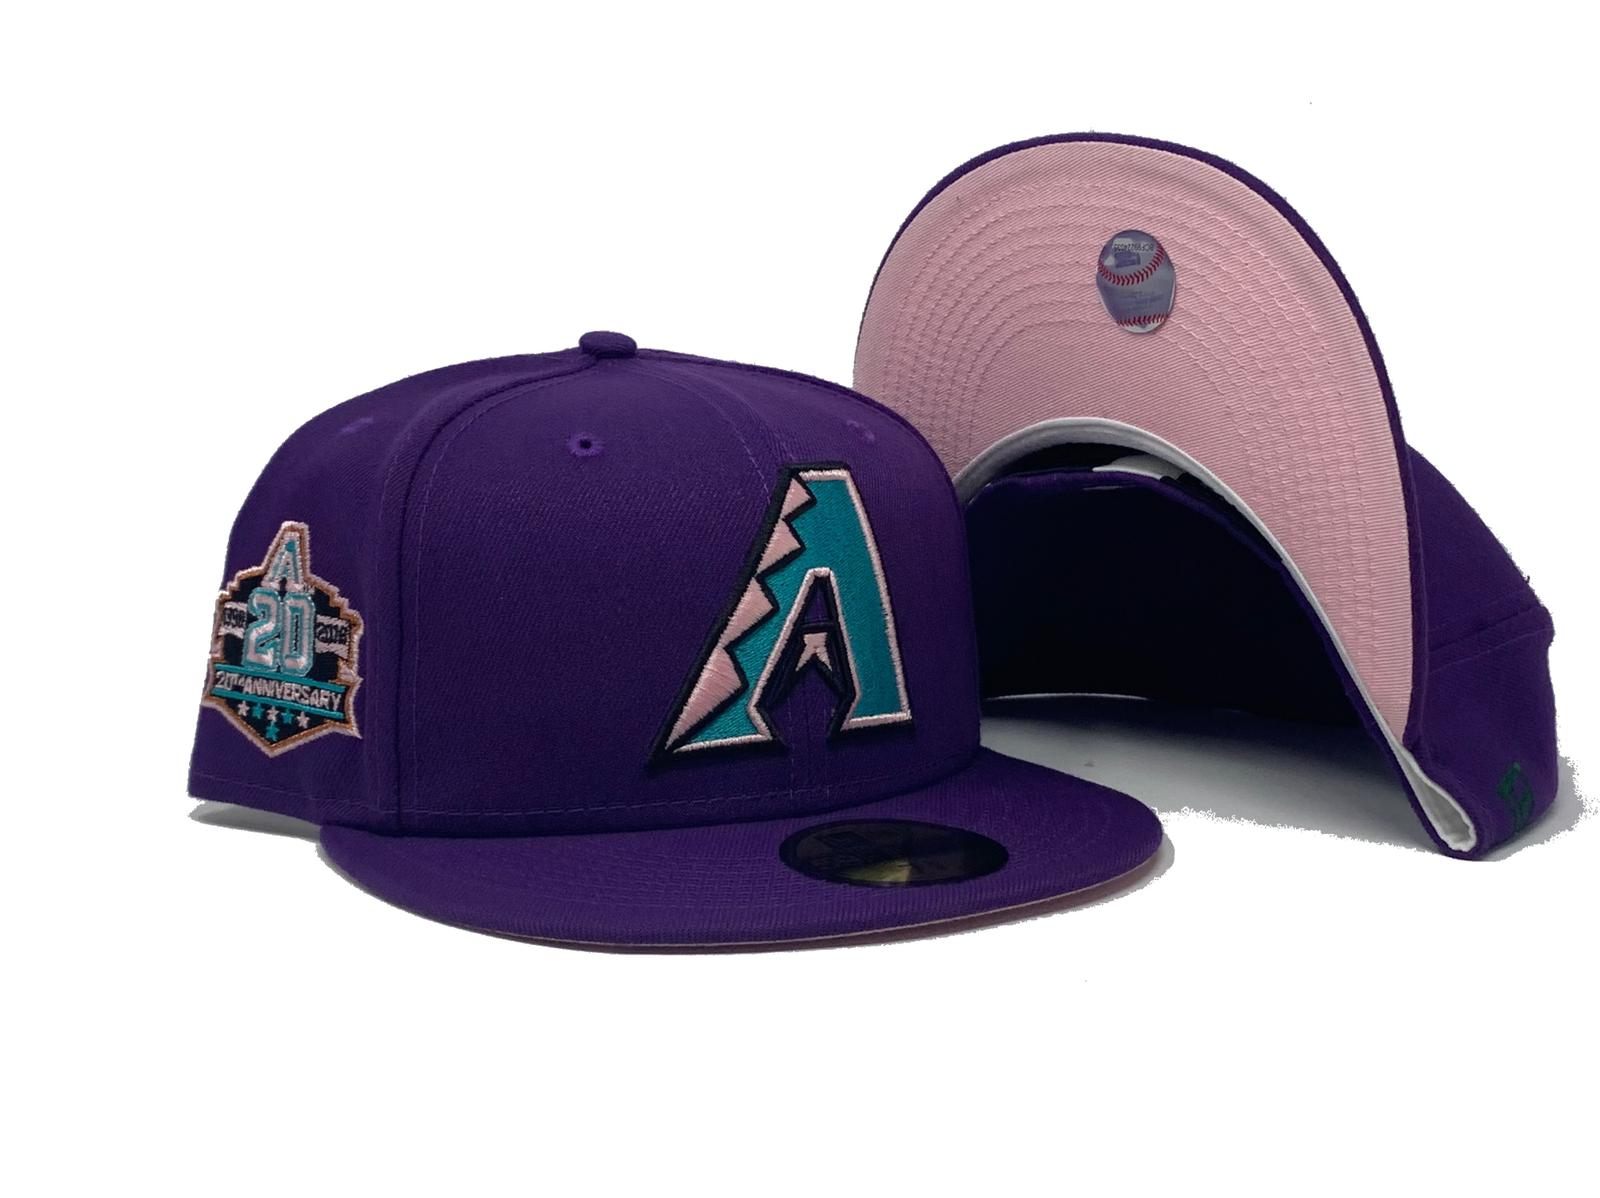 Arizona Diamondbacks Turn Back The Clock 59FIFTY Fitted Hat, Purple - Size: 7 5/8, MLB by New Era